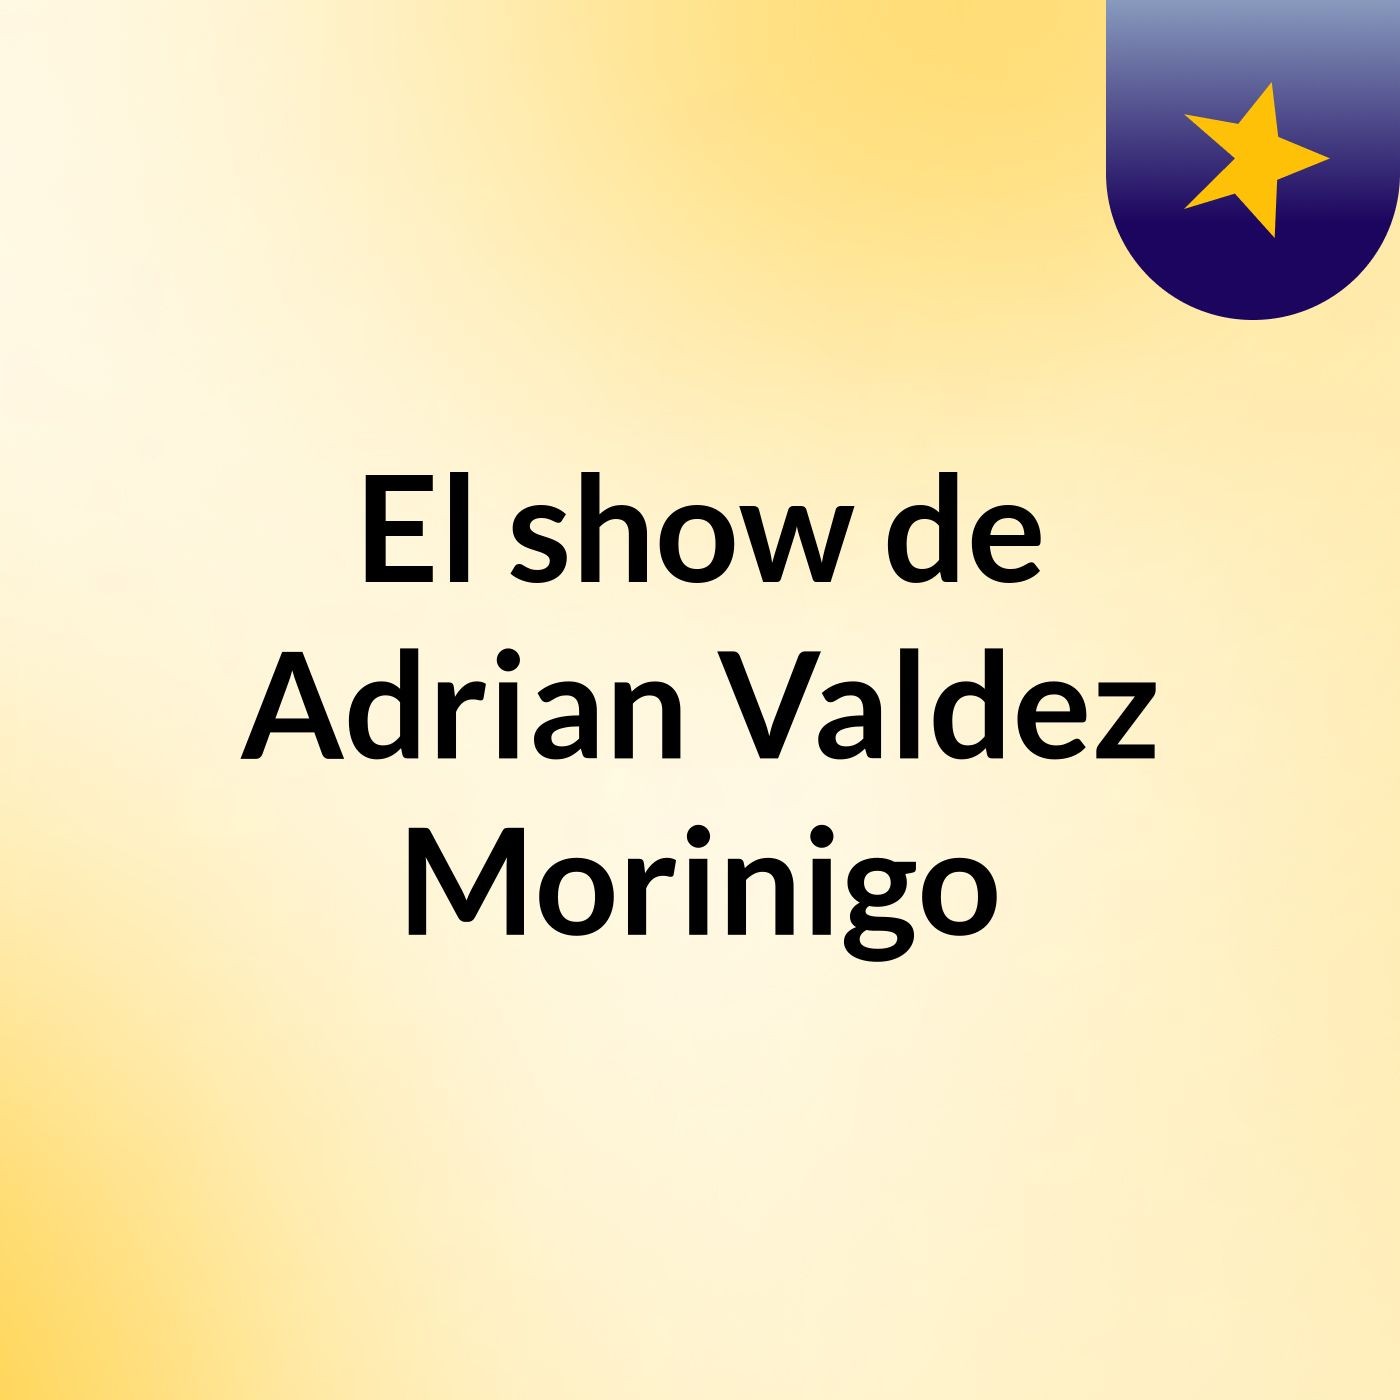 Episodio 2 - El show de Adrian Valdez Morinigo